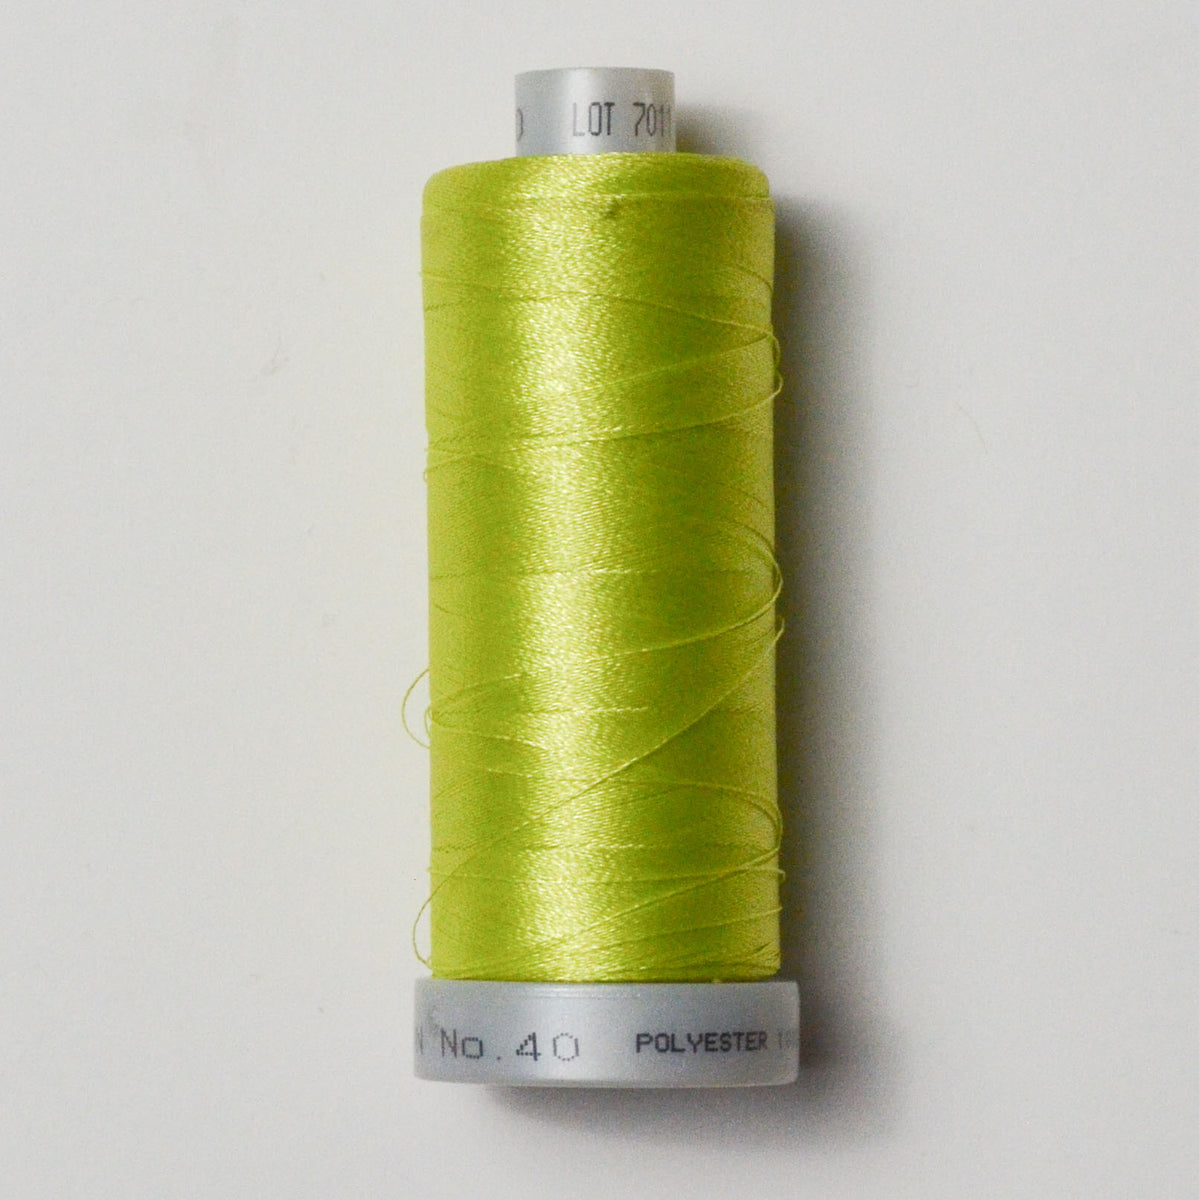 Madeira #40 PolyNeon Polyester Embroidery Thread, #1950 Neon Green, 5500 yd